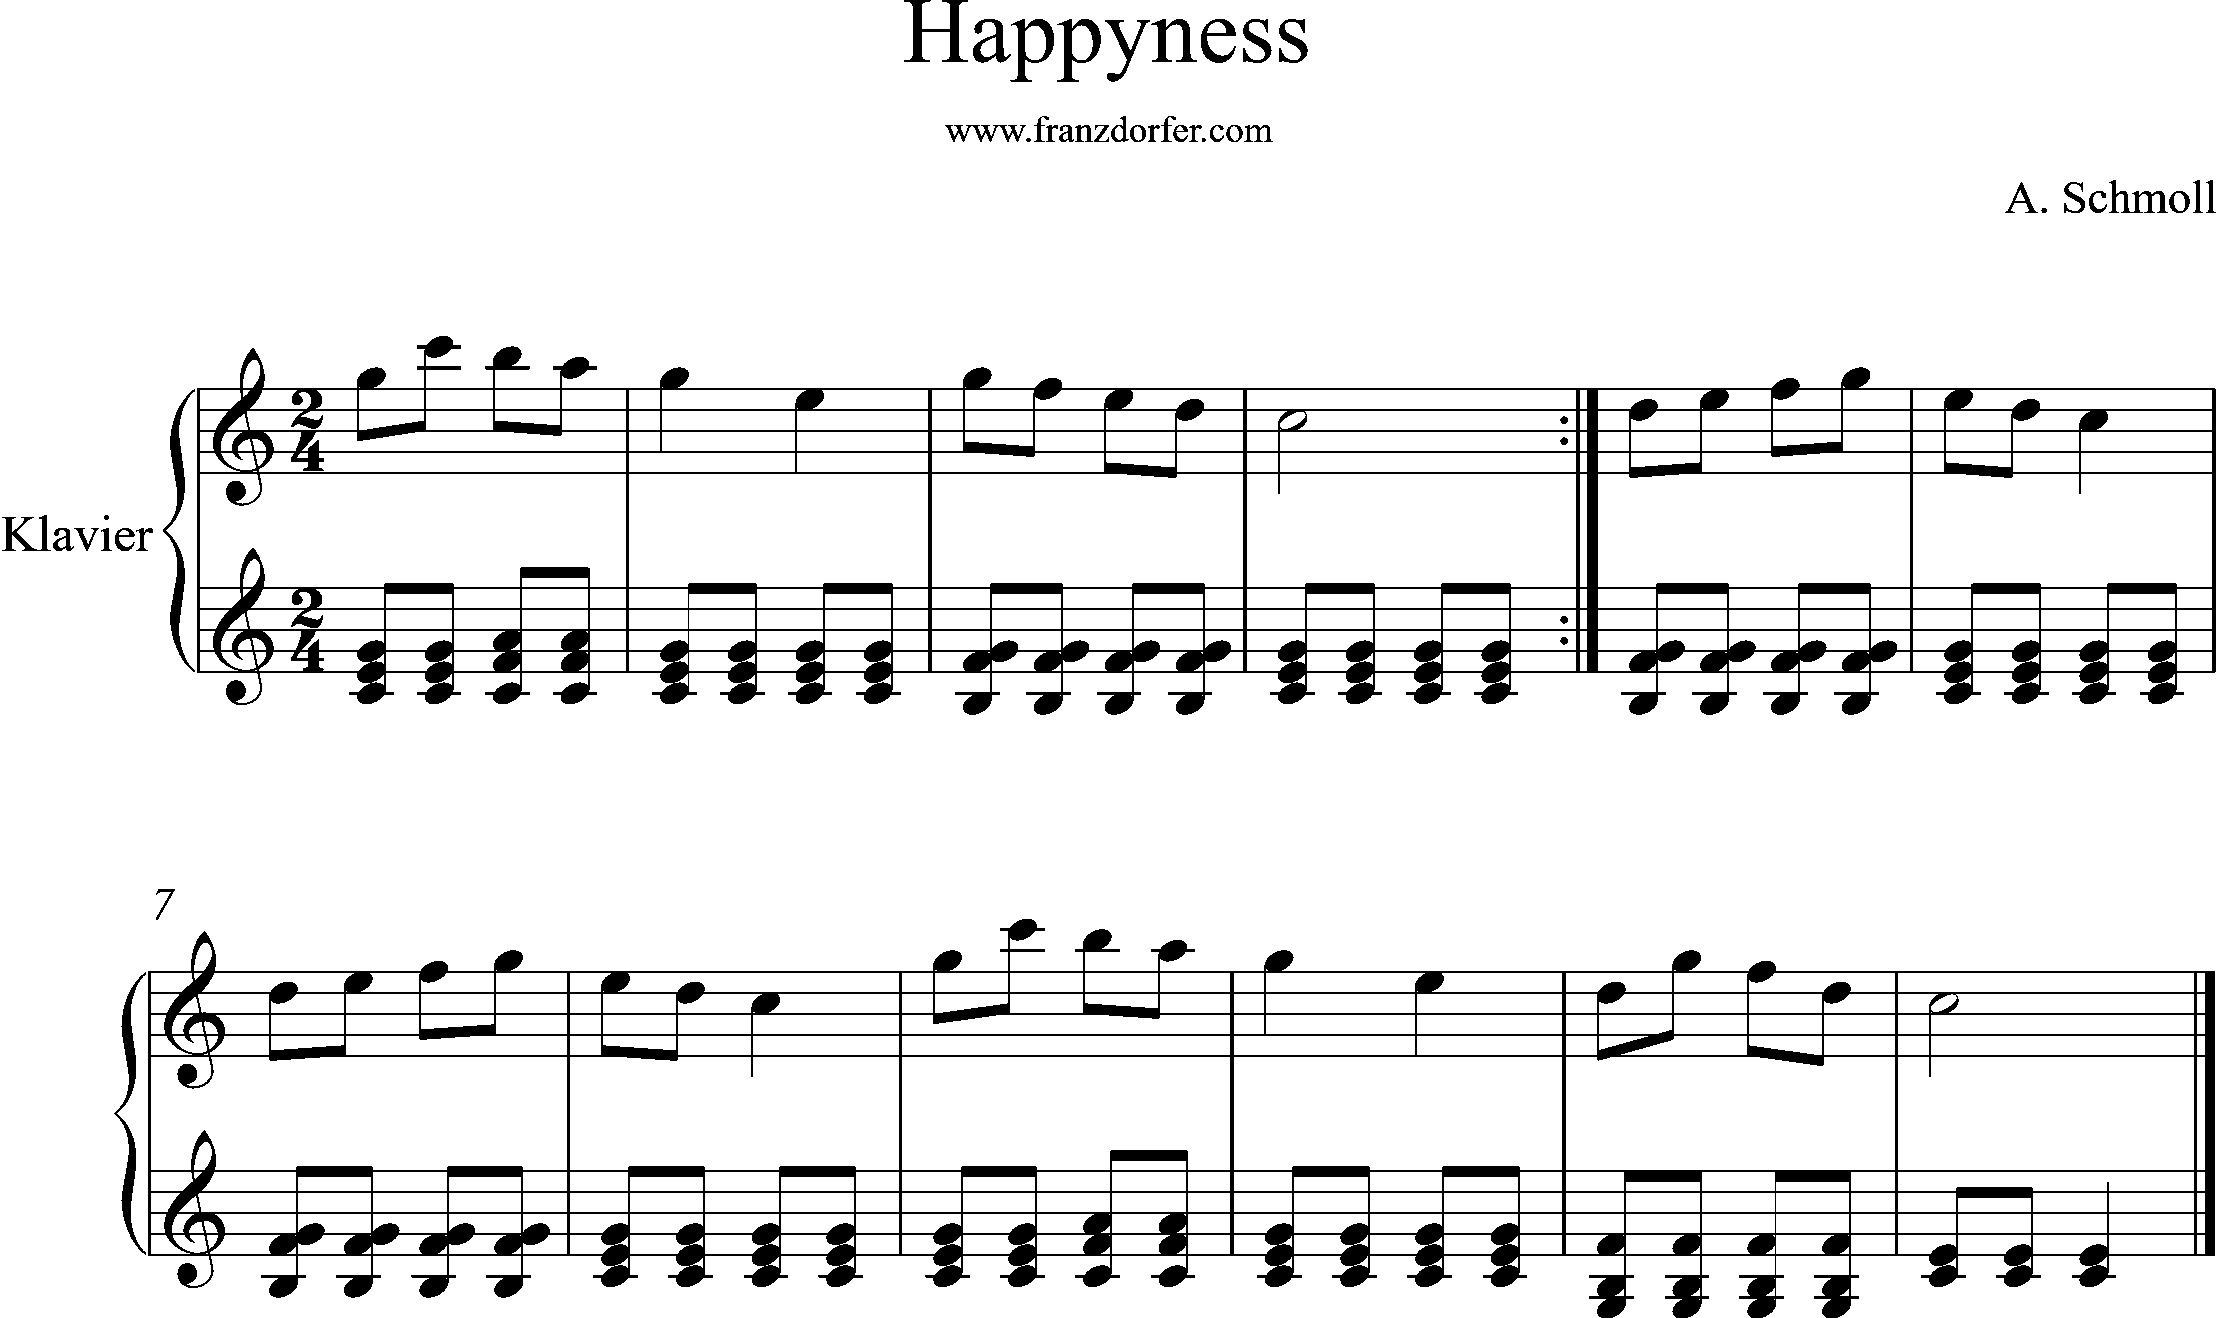 klaviernoten, A. Schmoll, Happyness